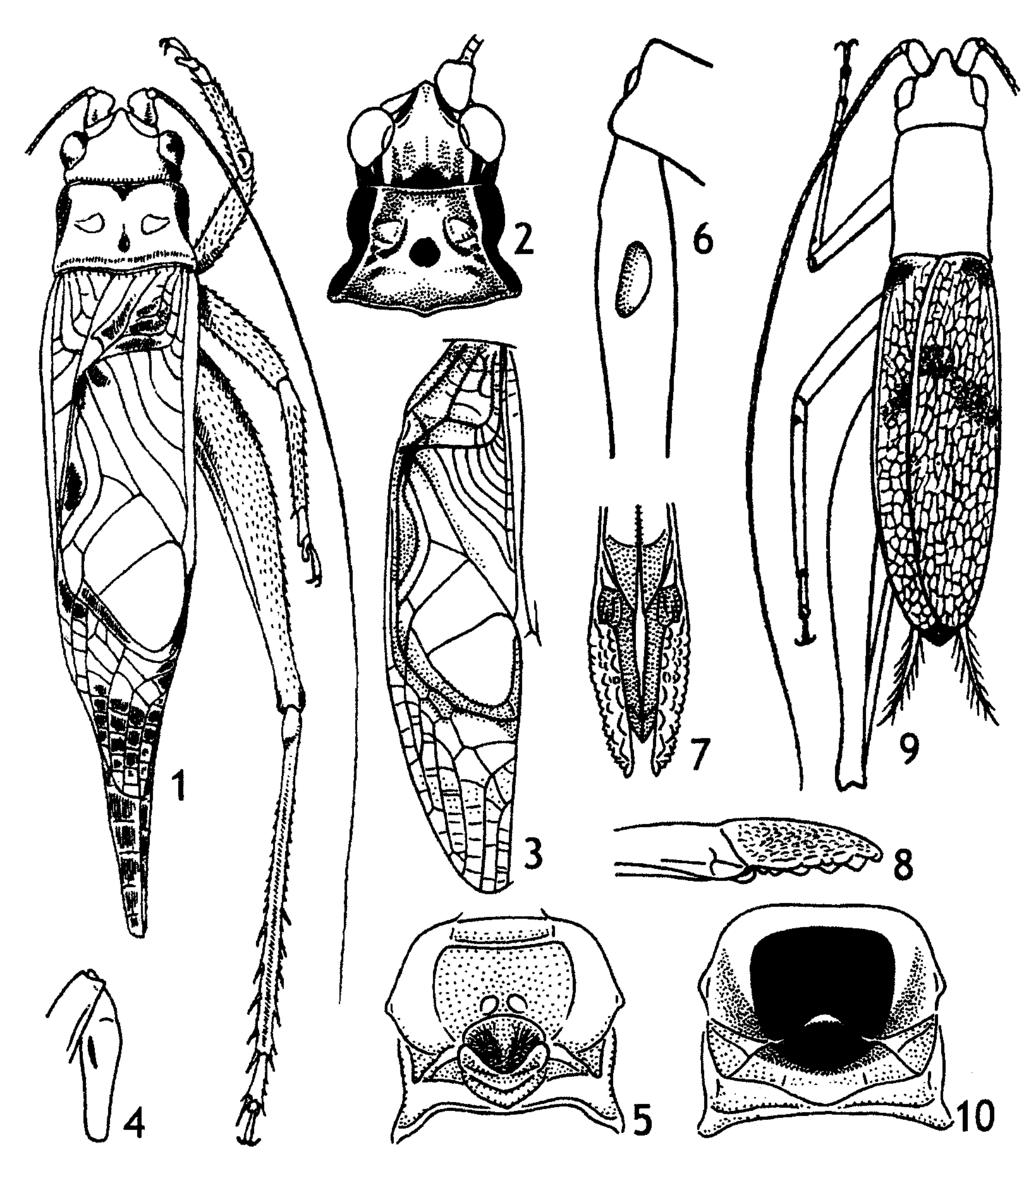 196 A.V. Gorochov: Taxonomy of Podoscirtinae. Part 4 ZOOSYST. ROSSICA Vol. 13 Figs IX (1-10). 1, Pseudotruljalia? nigronotata (Chop.) (from Chopard, 1934); 2-5, P. speciosa sp. n.; 6-8, Calyptotrypus?